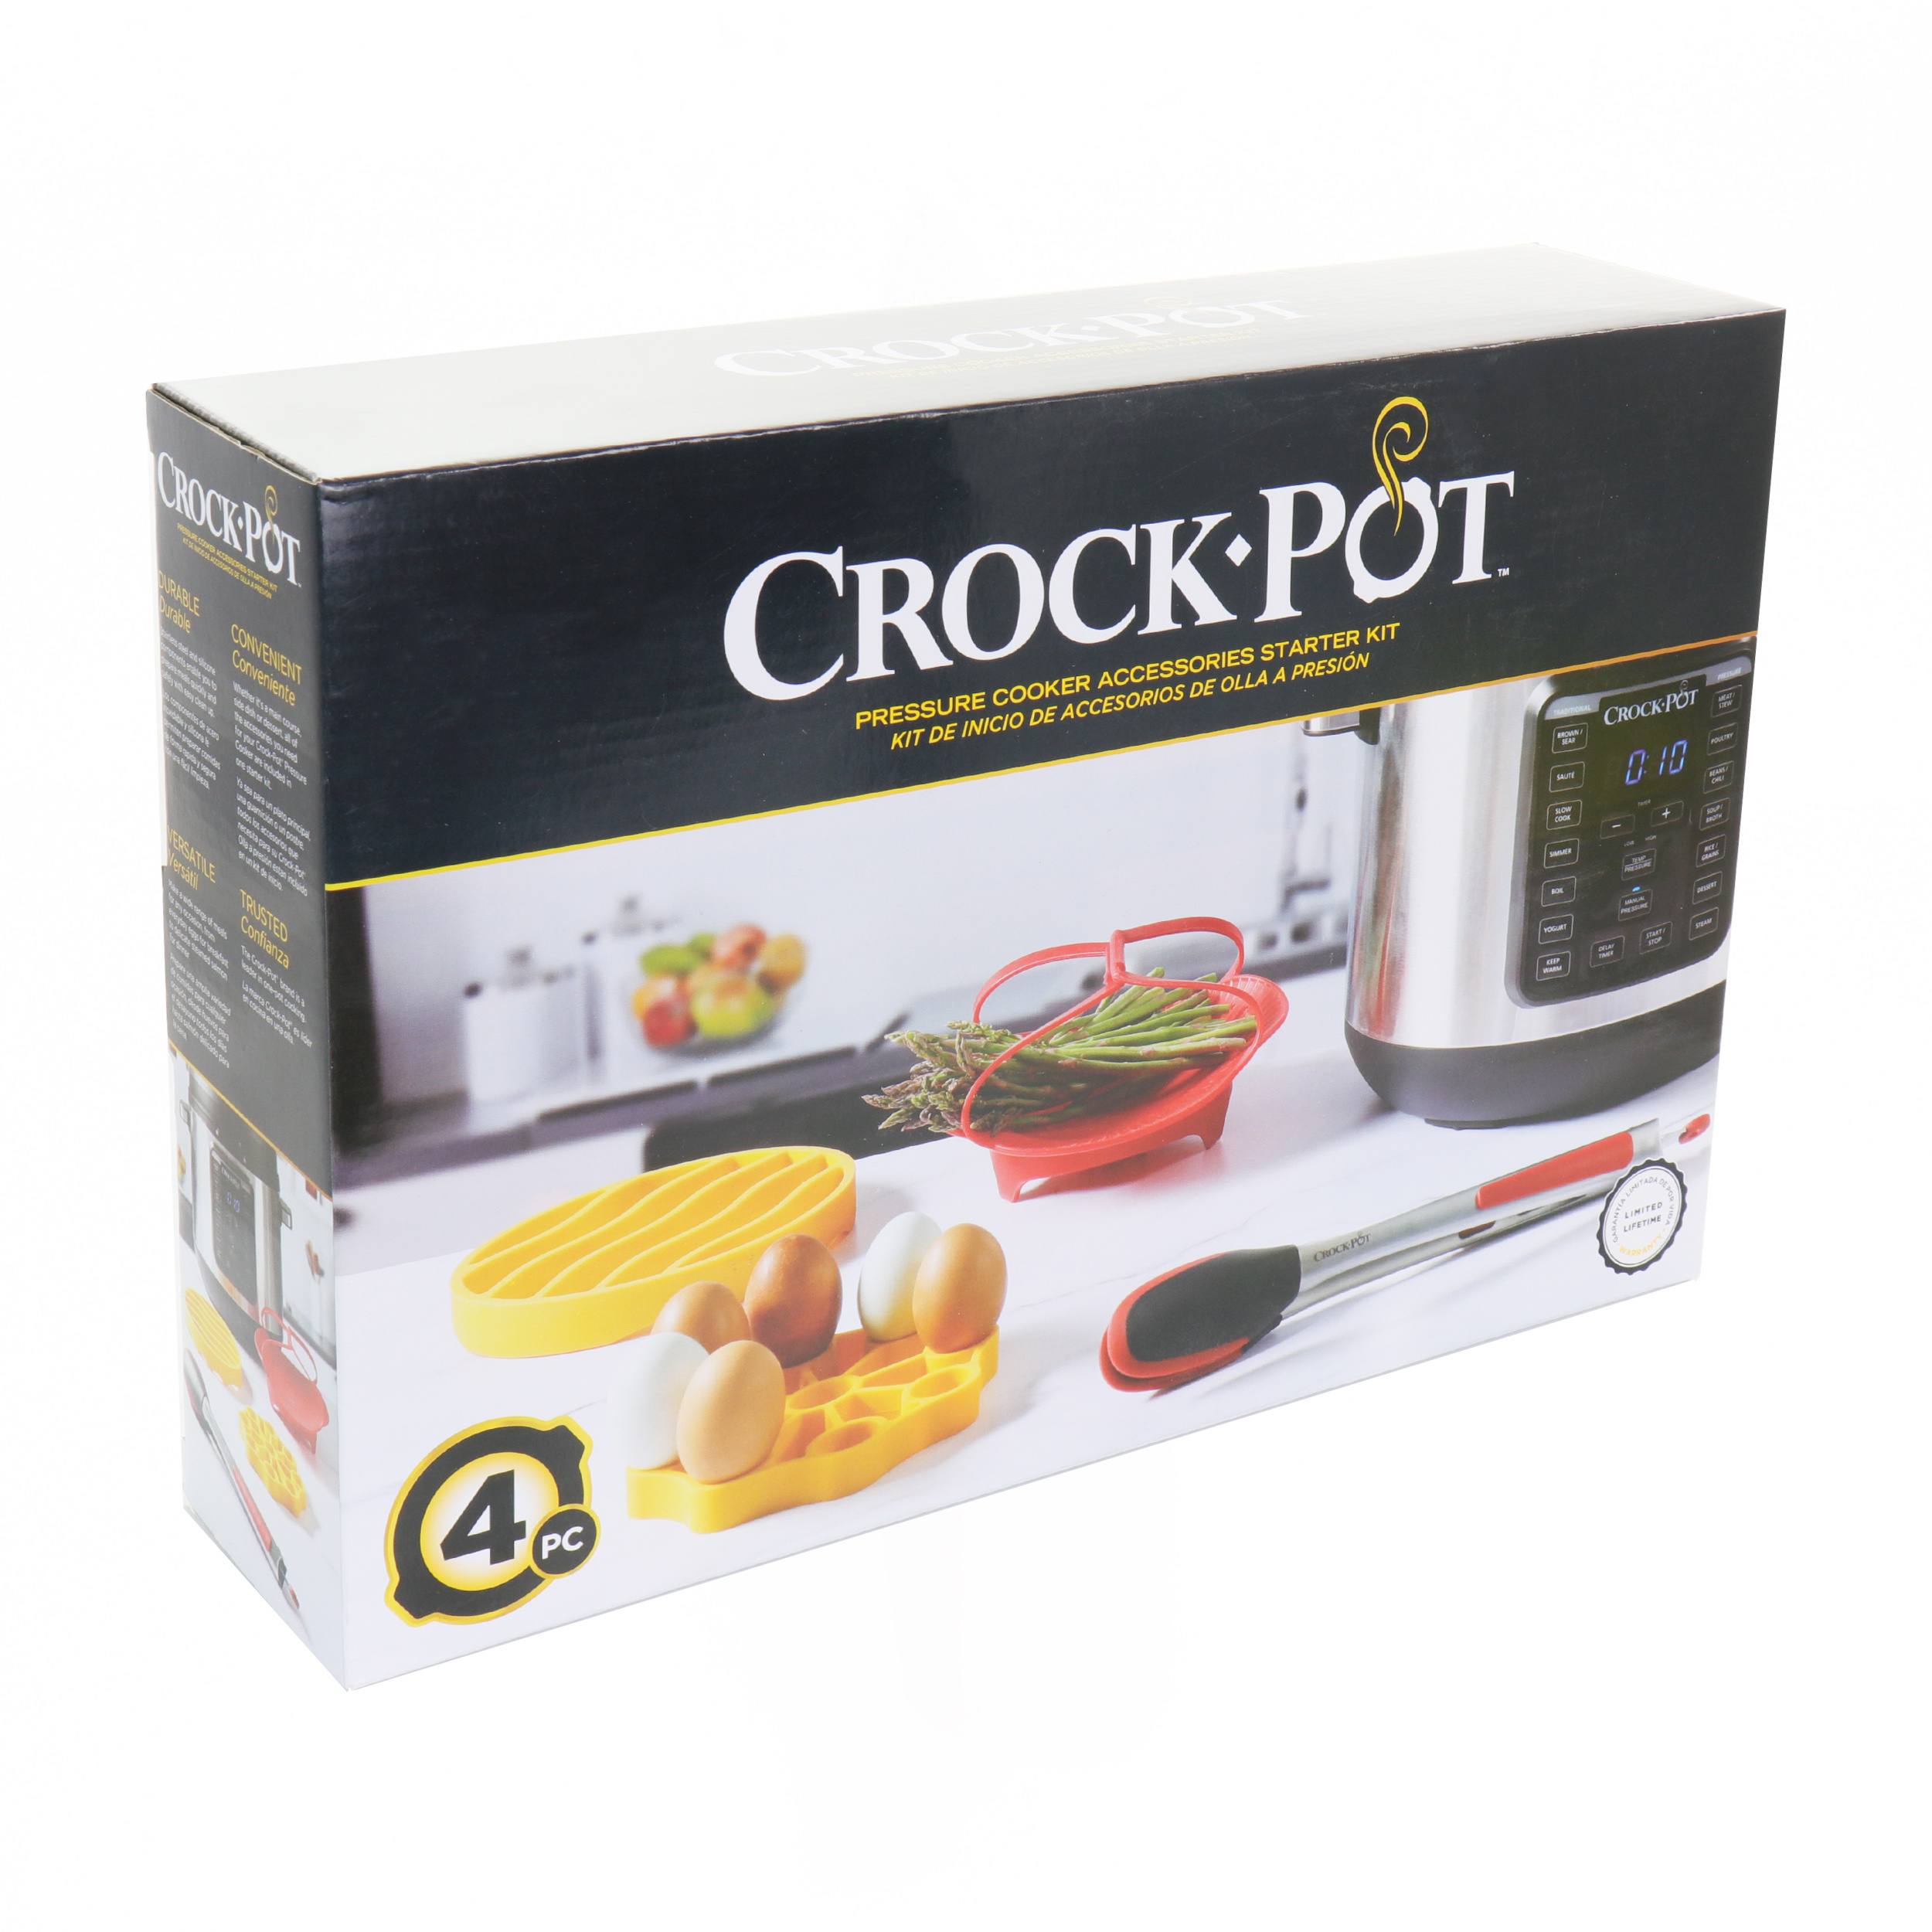 Crock-Pot 4 Piece Pressure Cooker Accessories Starter Kit